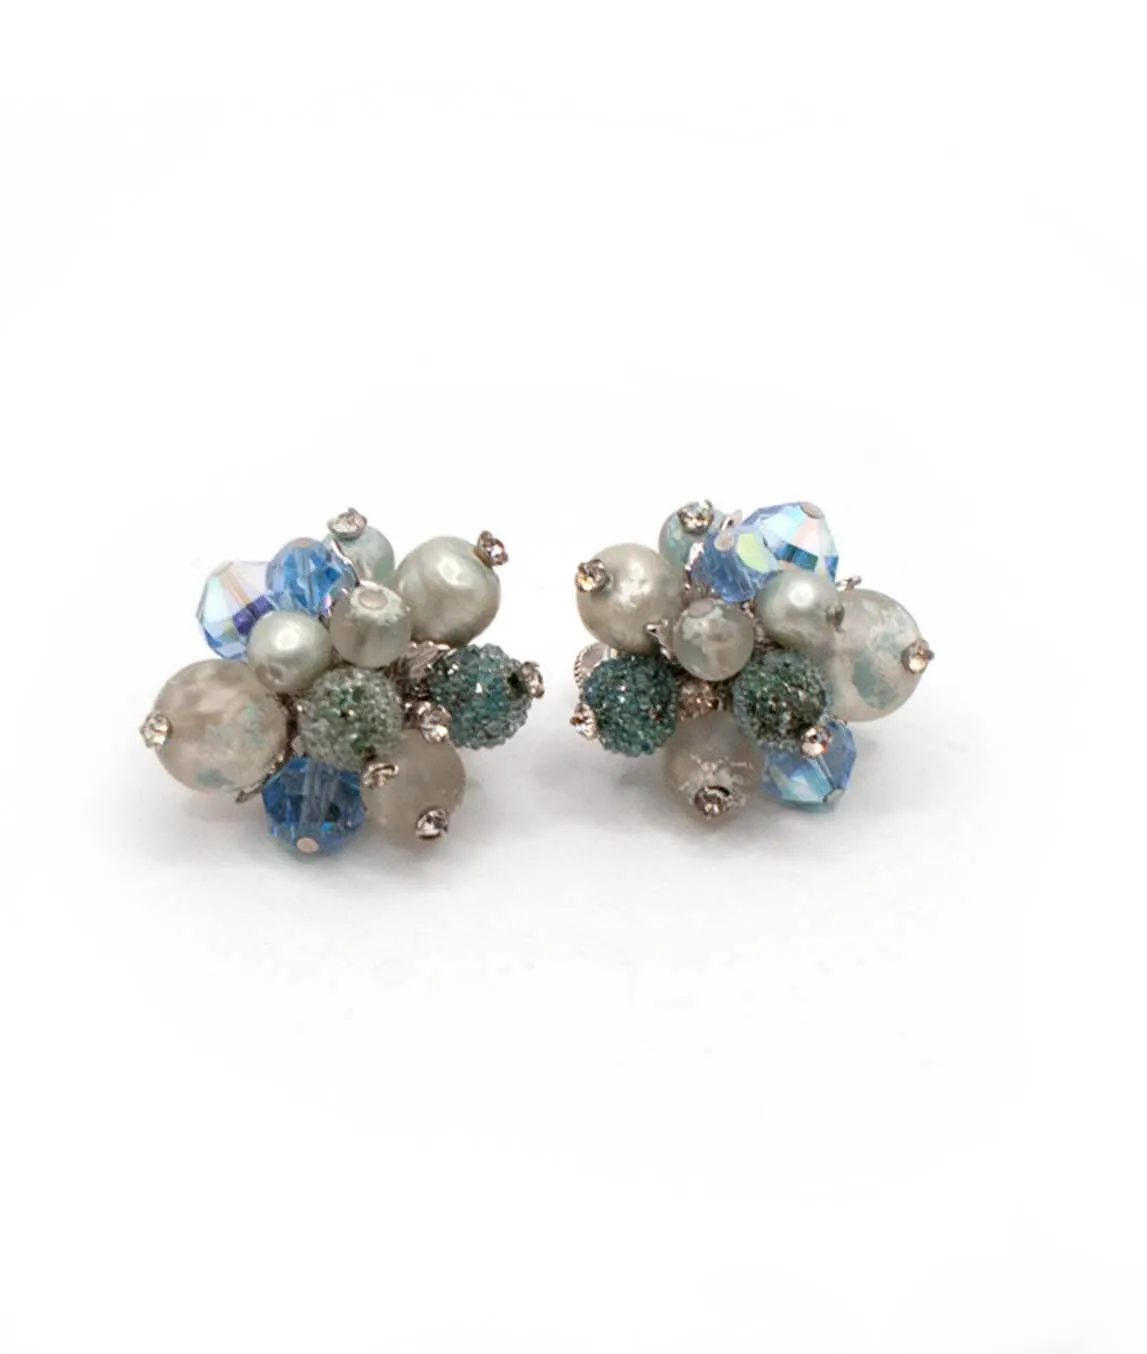 Vendôme Earrings blue green and white beads